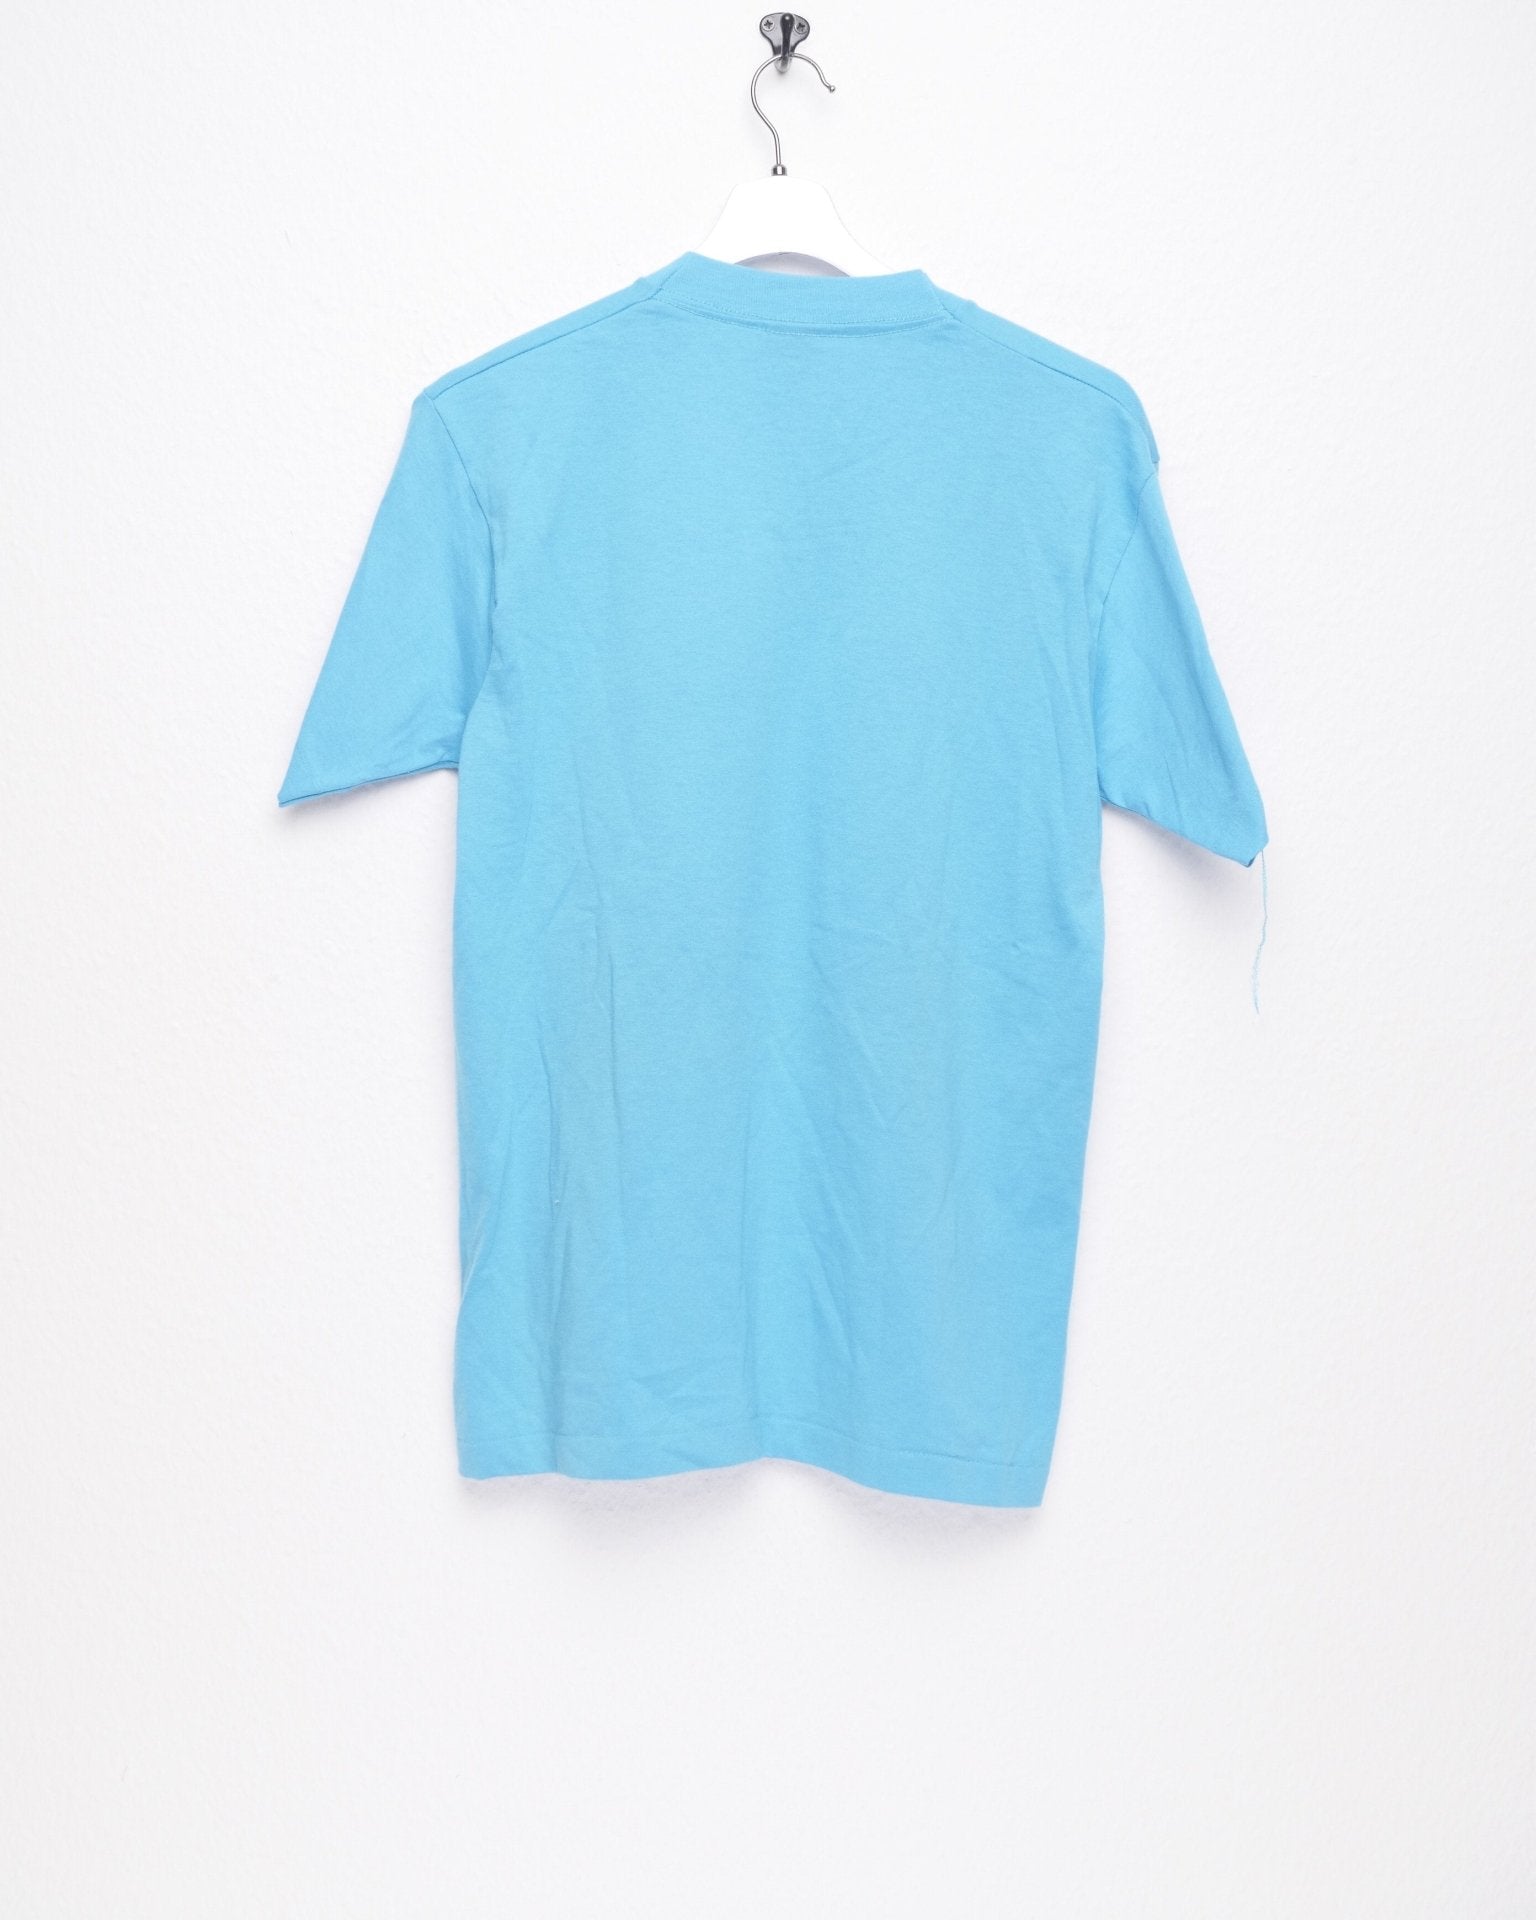 'Las Vegas' printed Graphic blue Shirt - Peeces